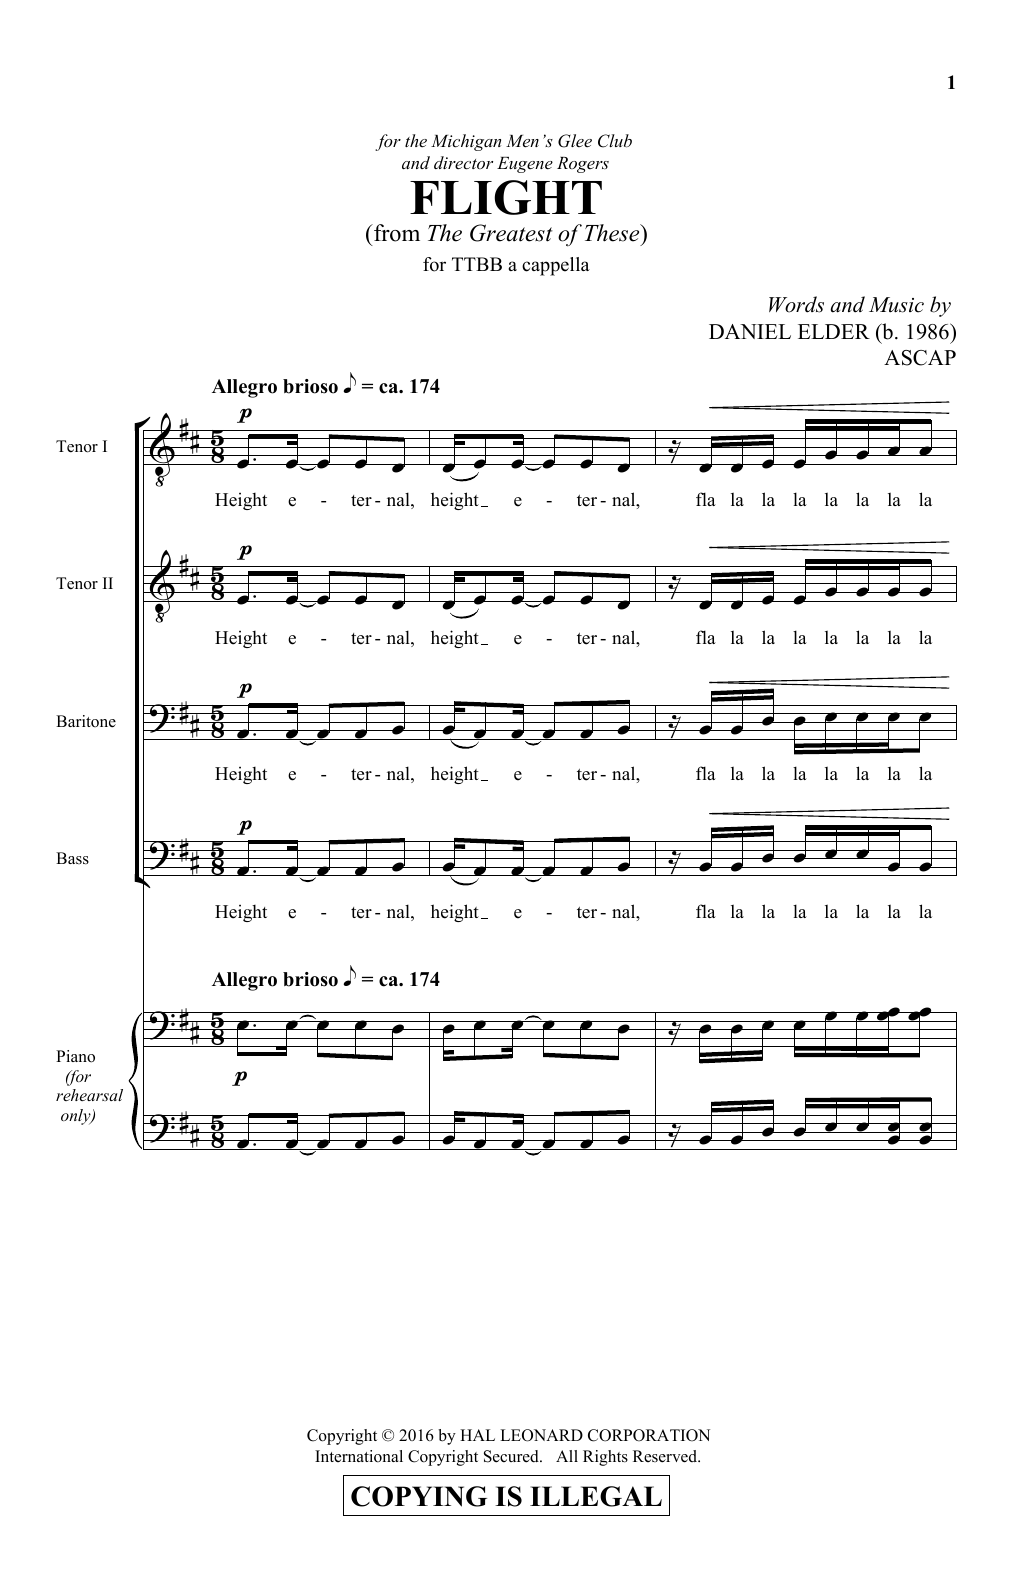 Daniel Elder Flight Sheet Music Notes & Chords for TTBB - Download or Print PDF